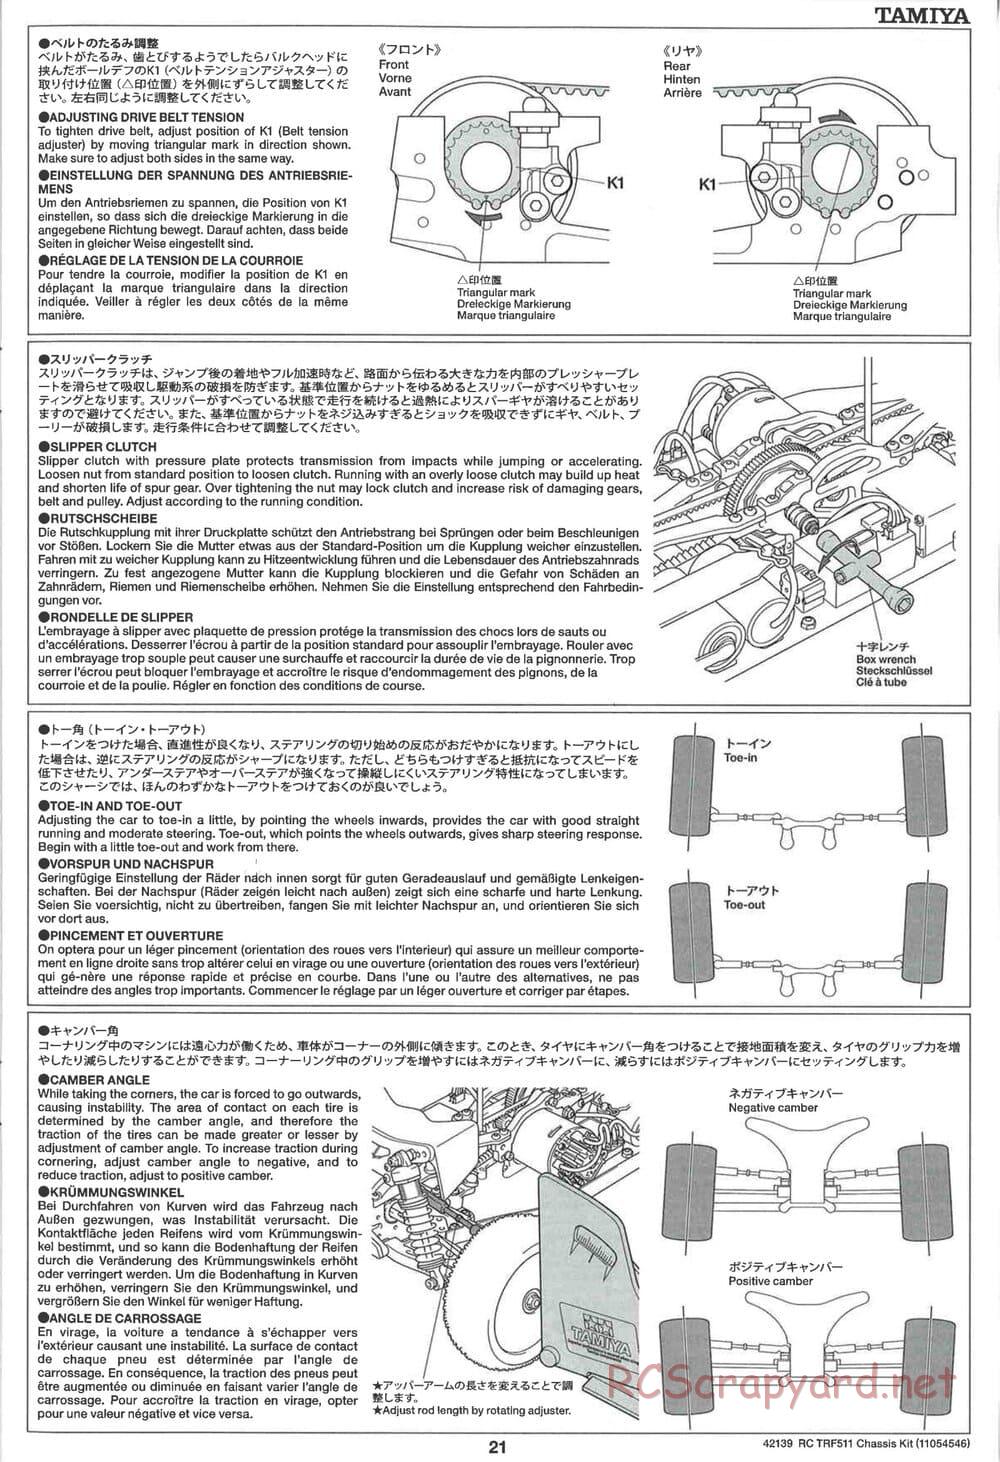 Tamiya - TRF511 Chassis - Manual - Page 21